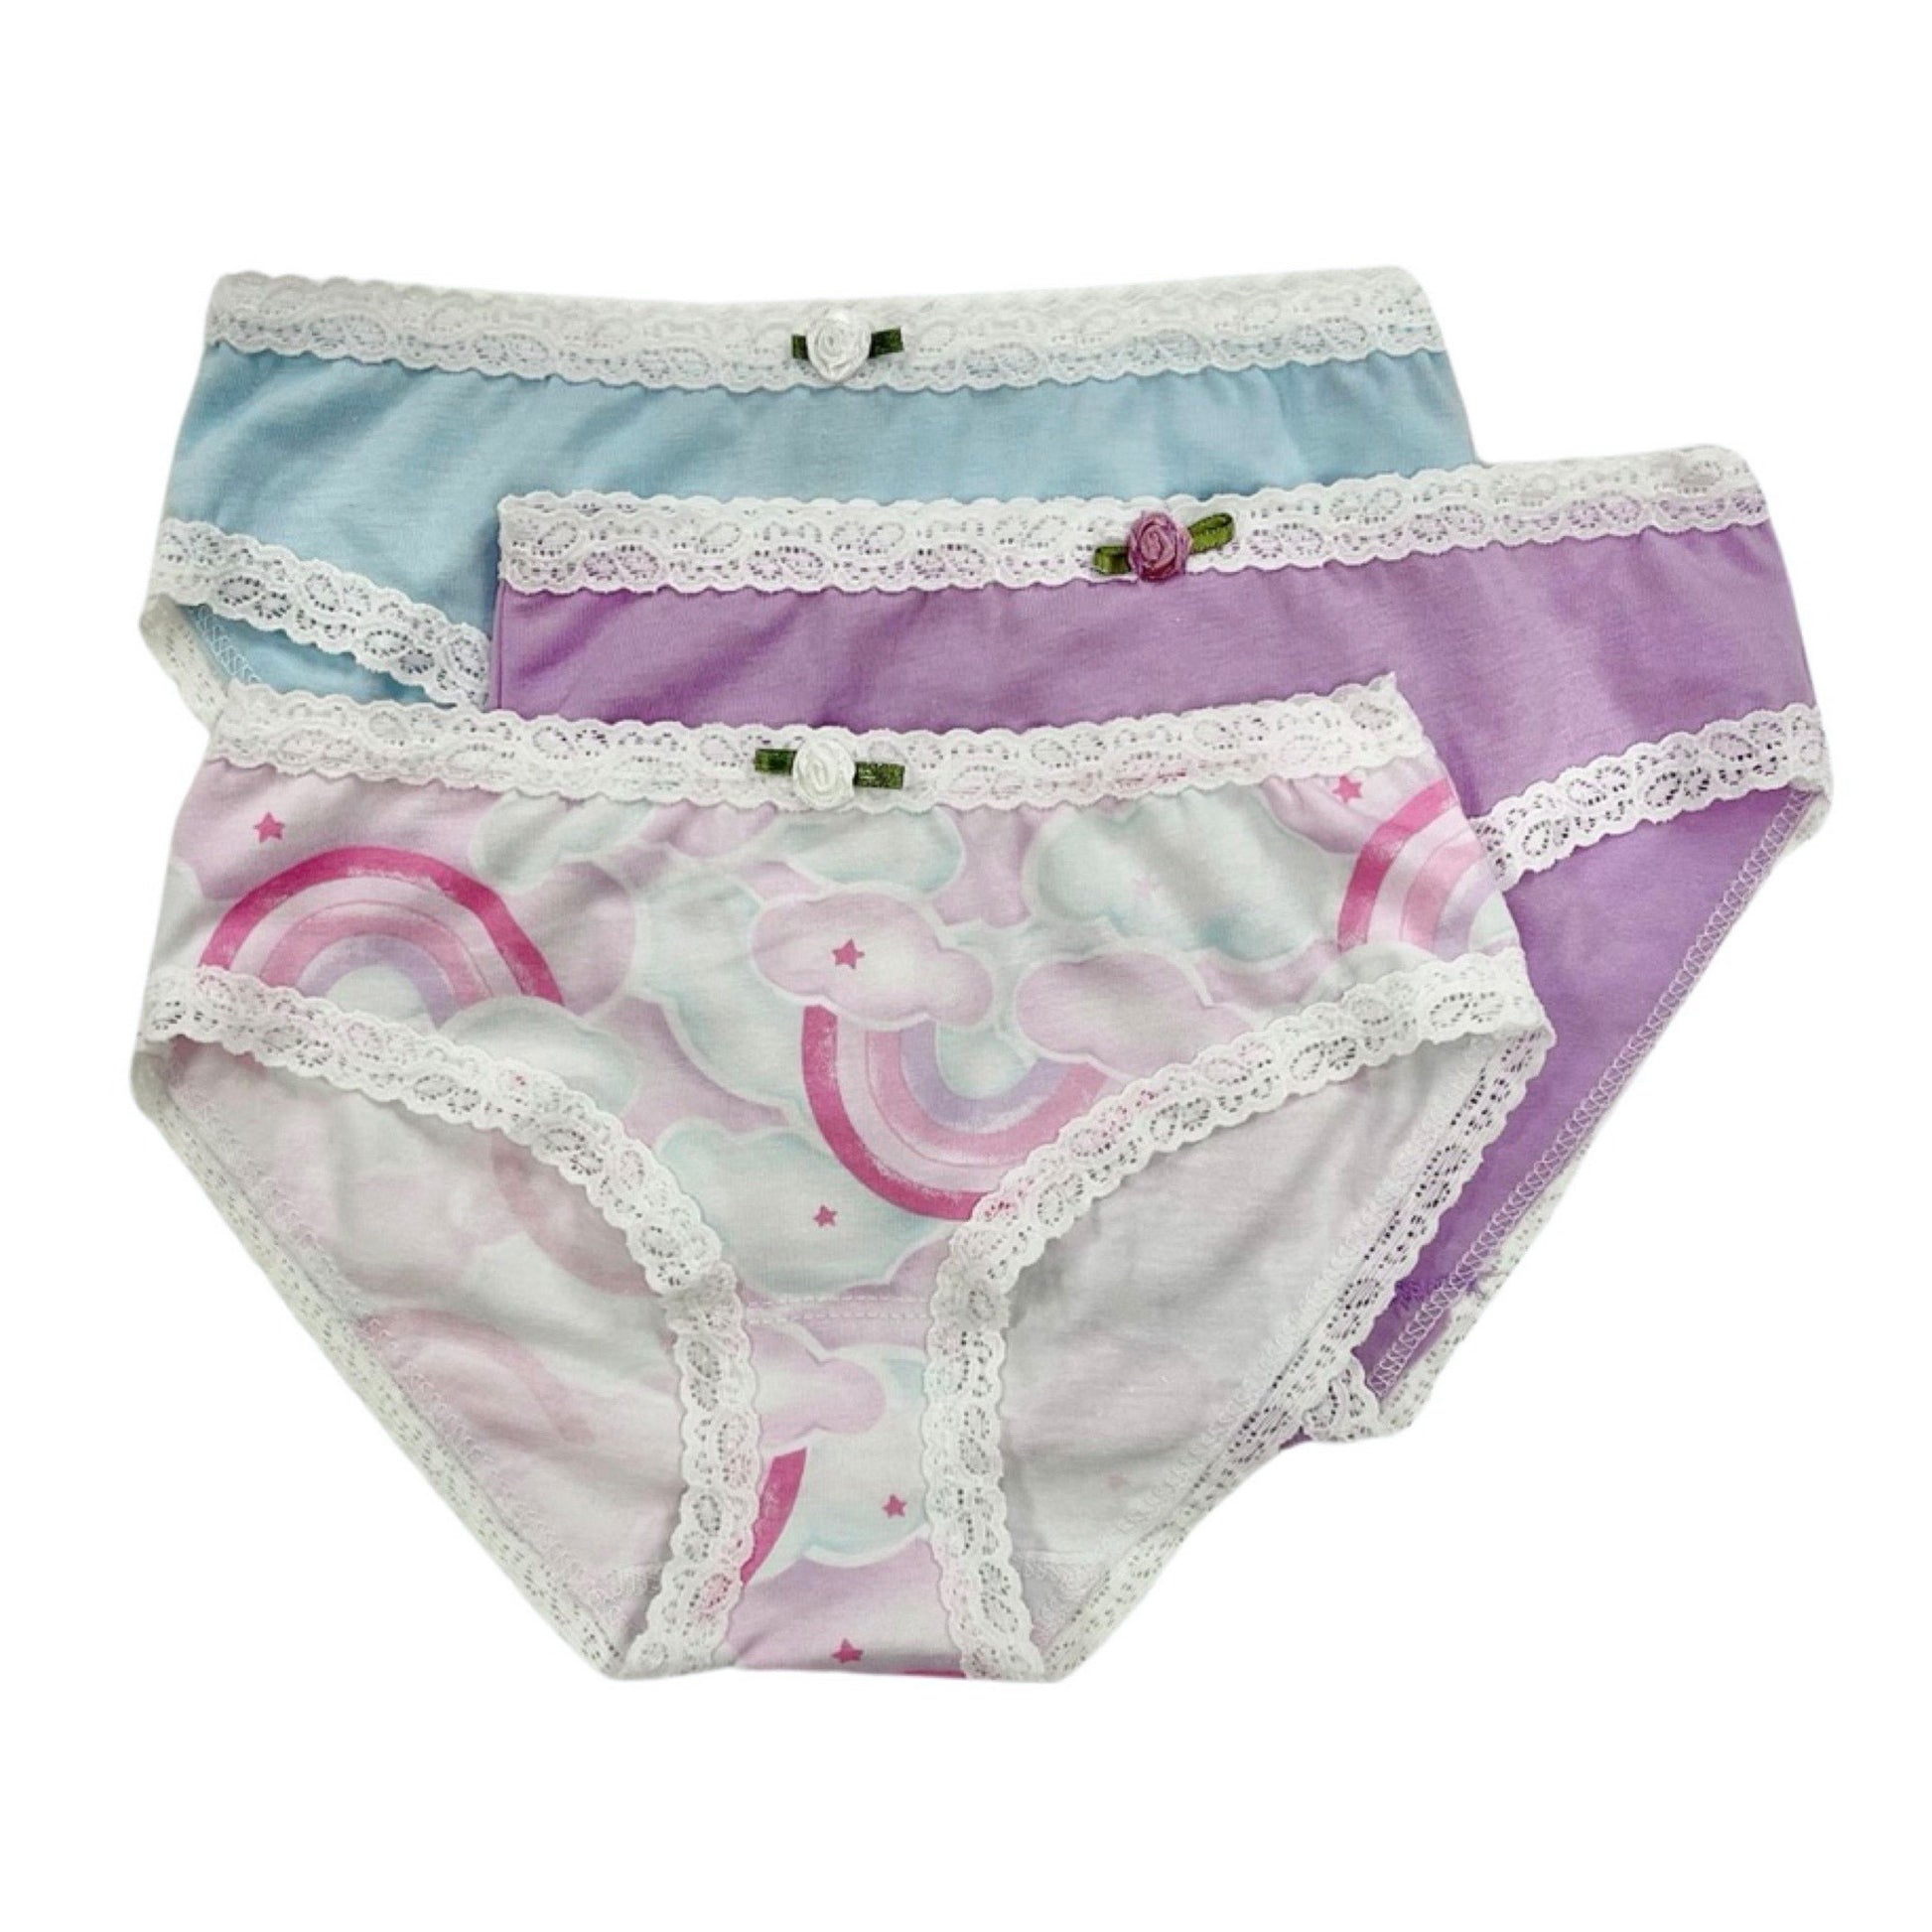 U20 Esme Girls Comfortable Underwear Bikinis XS S M L XL XXL panty Clearance